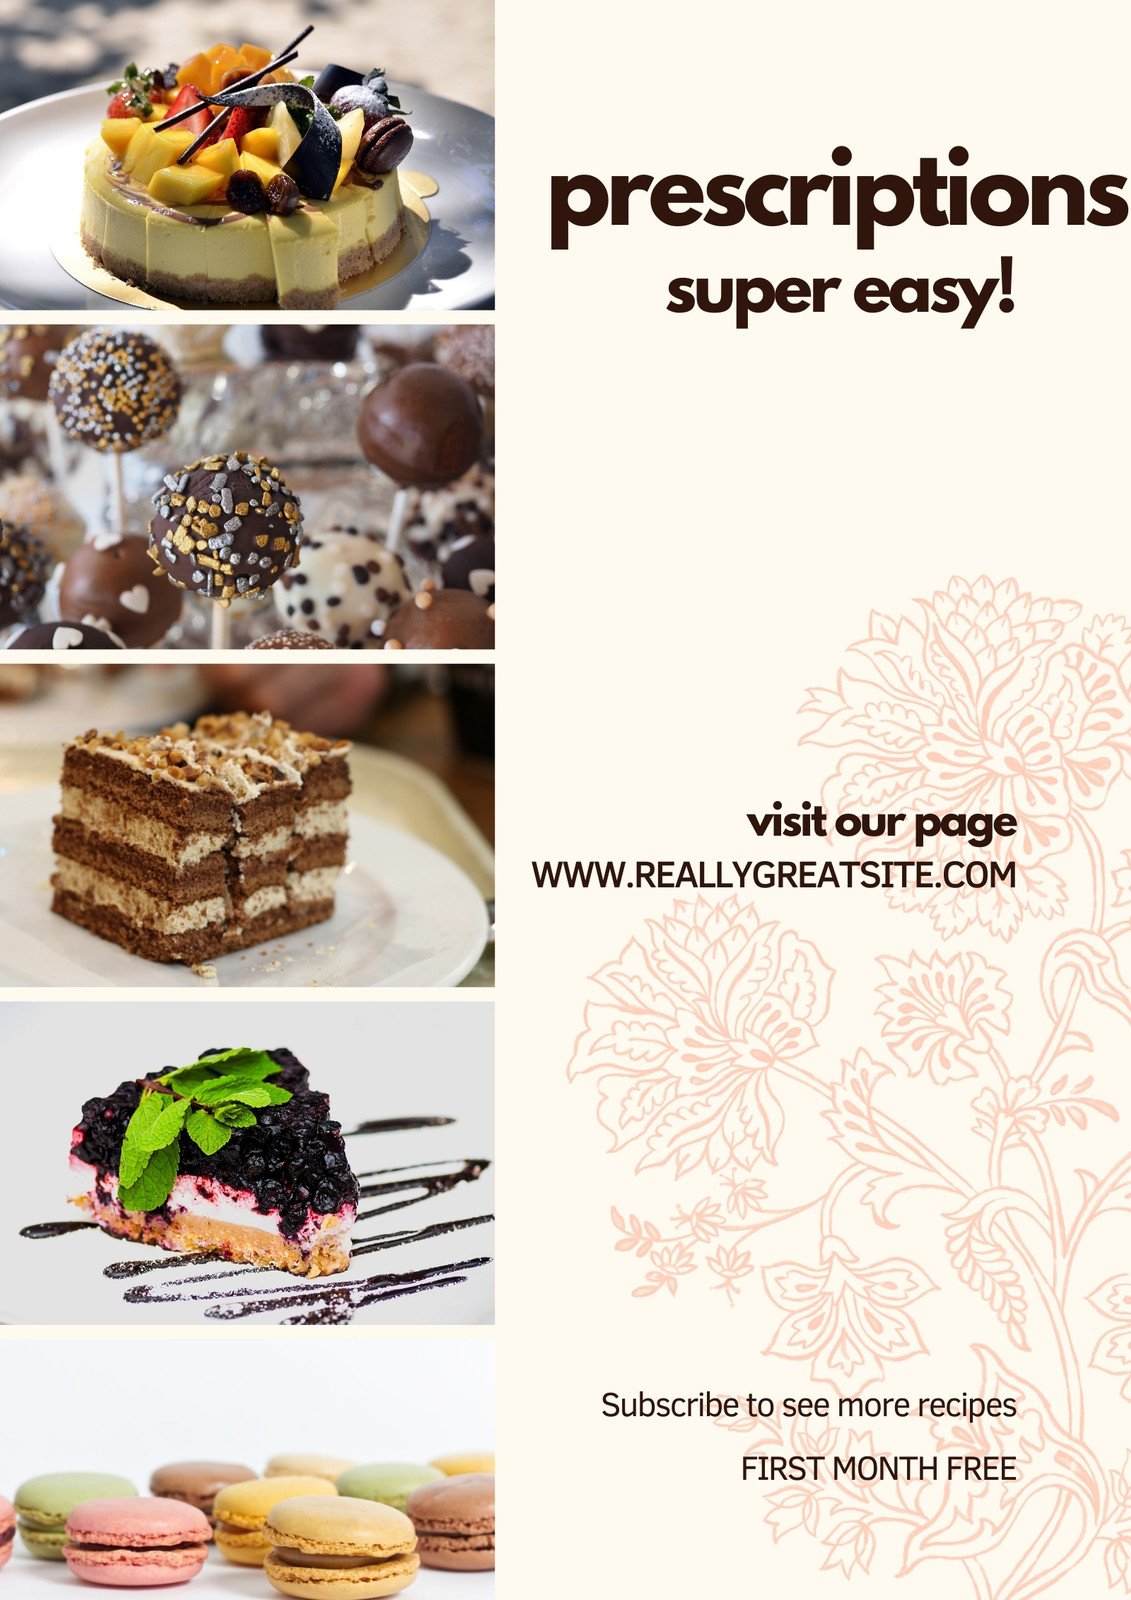 Bakery - Cake & Bakery Products Shop Joomla Template - TemplateToaster